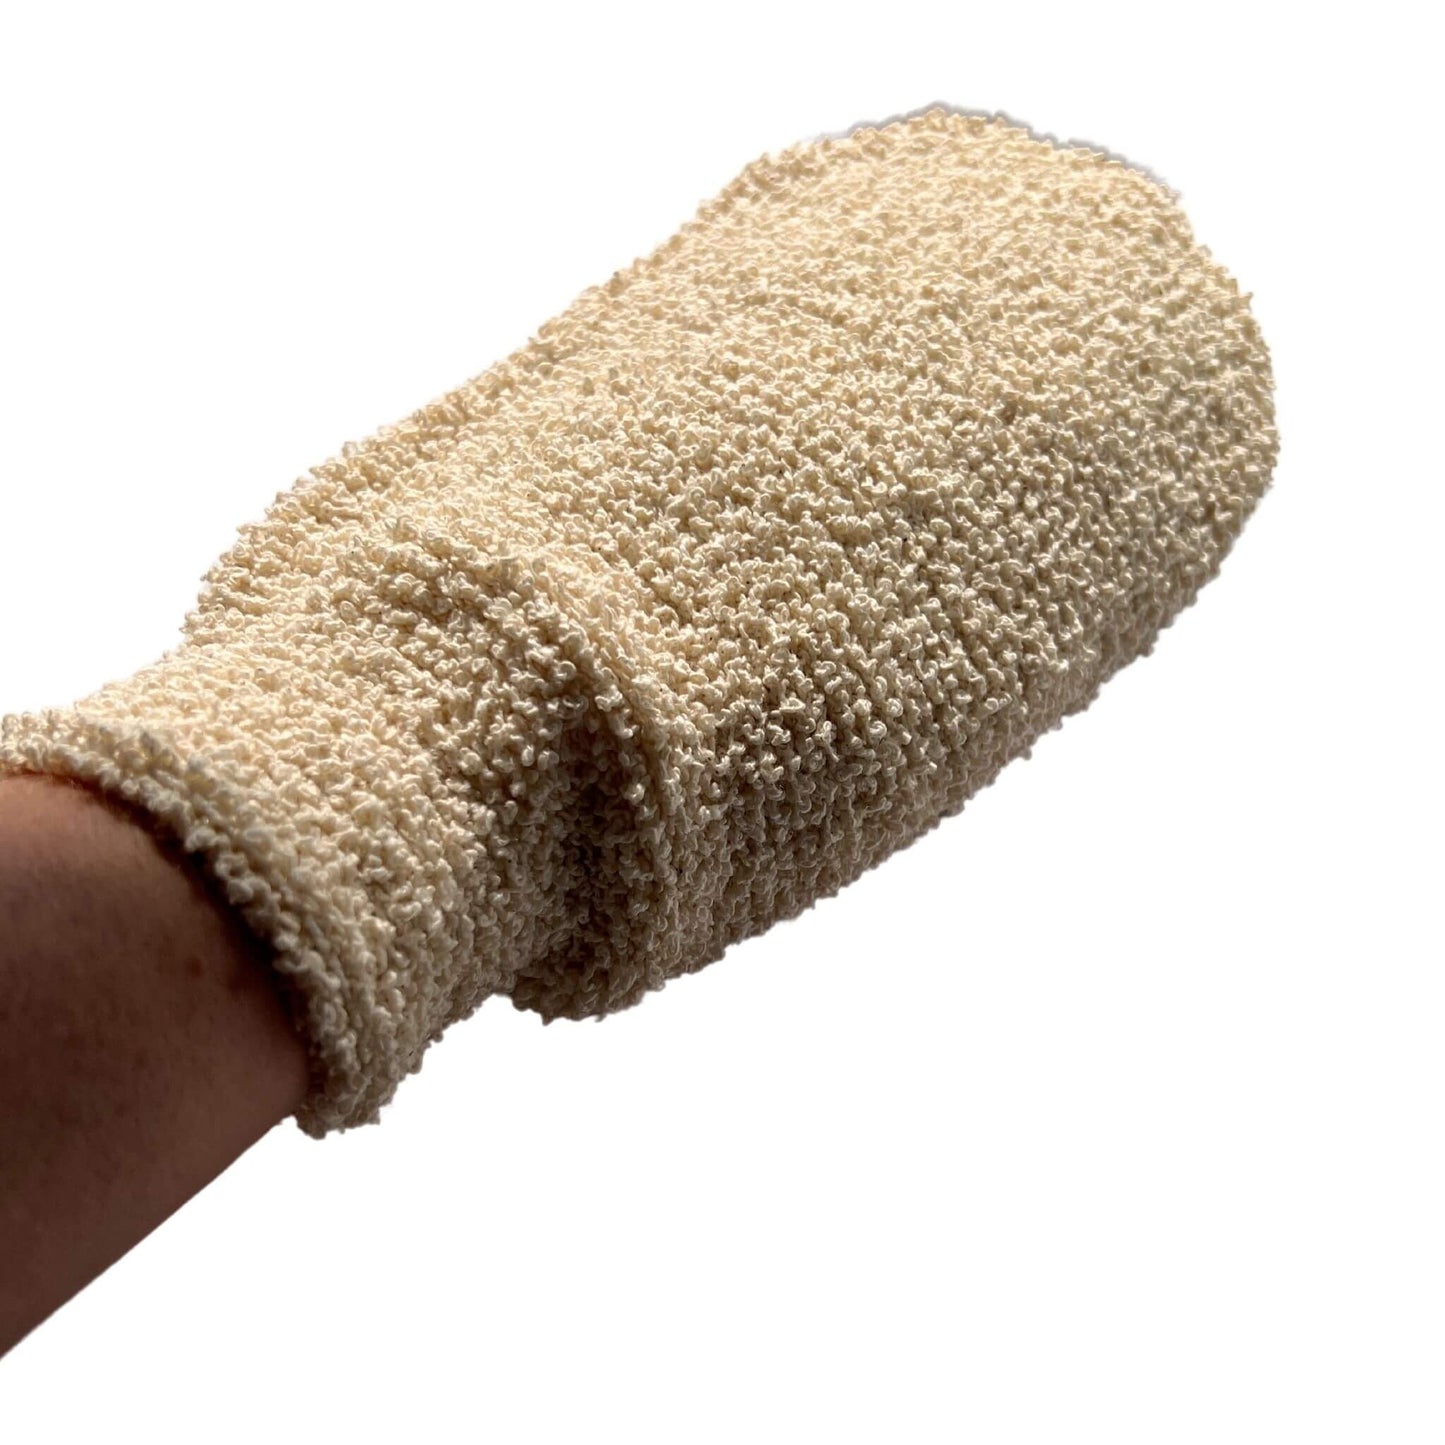 Ramie fibre natural exfoliating mitt for body - made from natural plant-based fibre